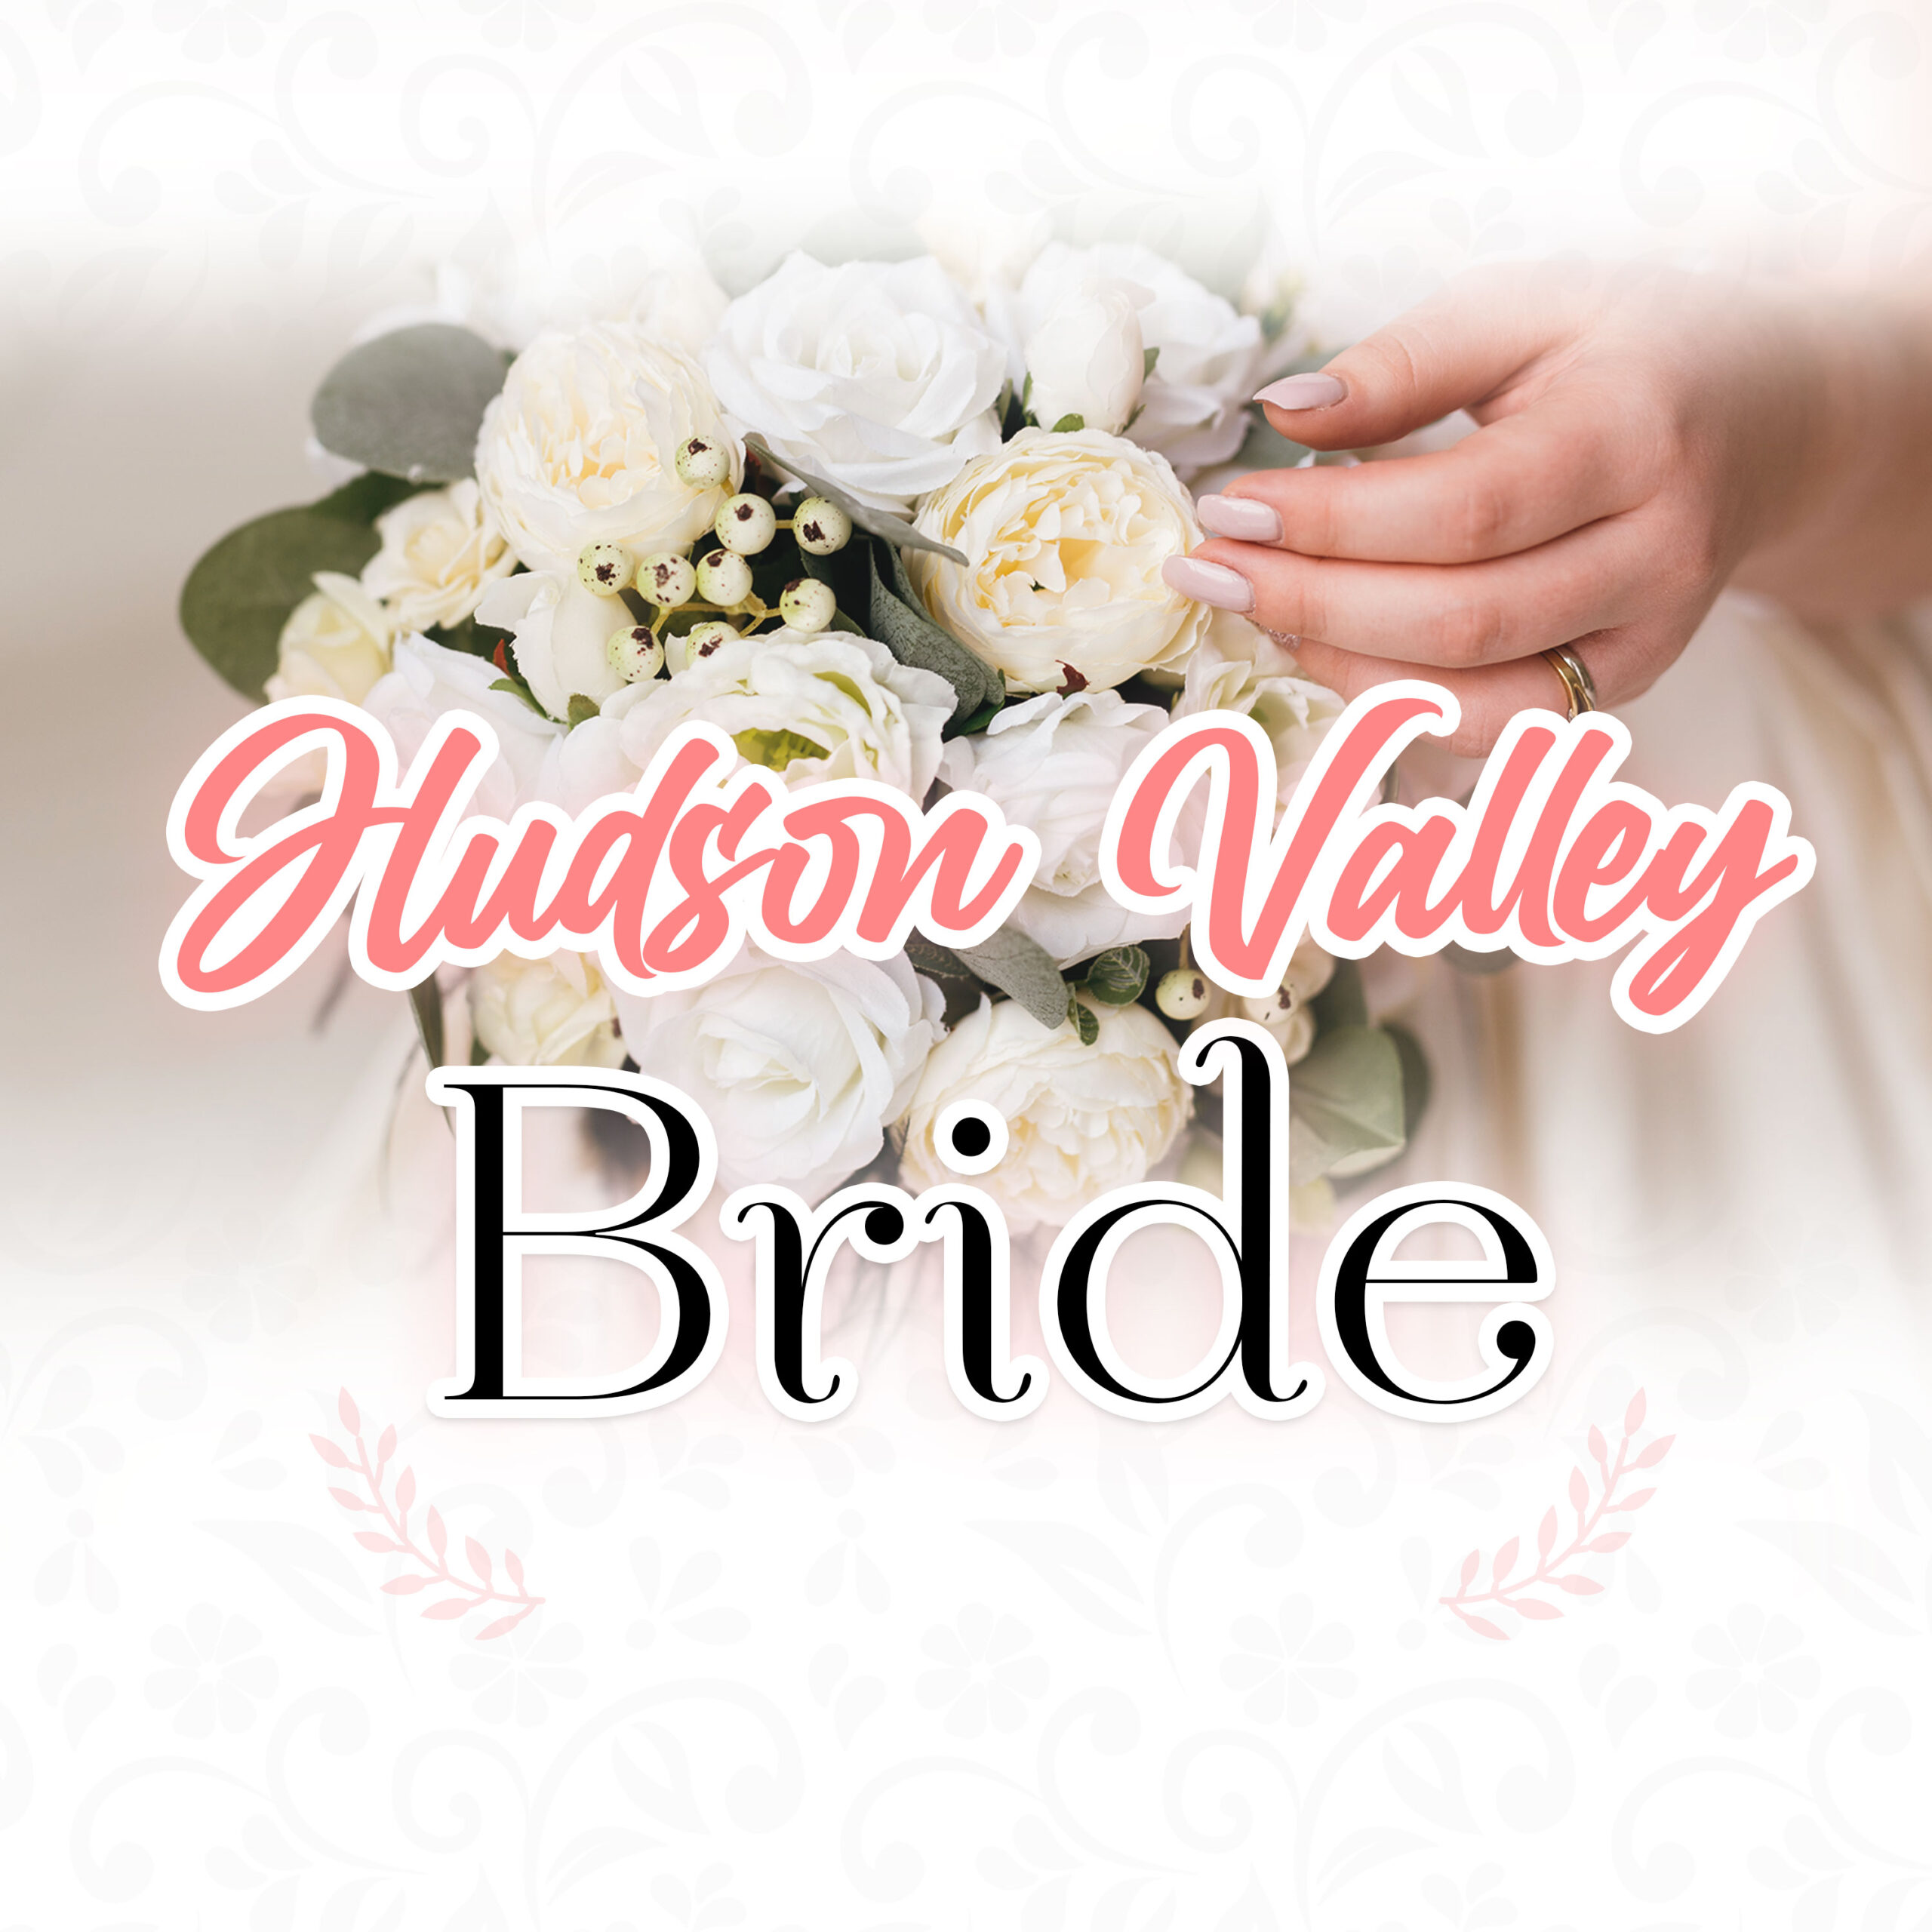 Hudson Valley Bride podcast logo